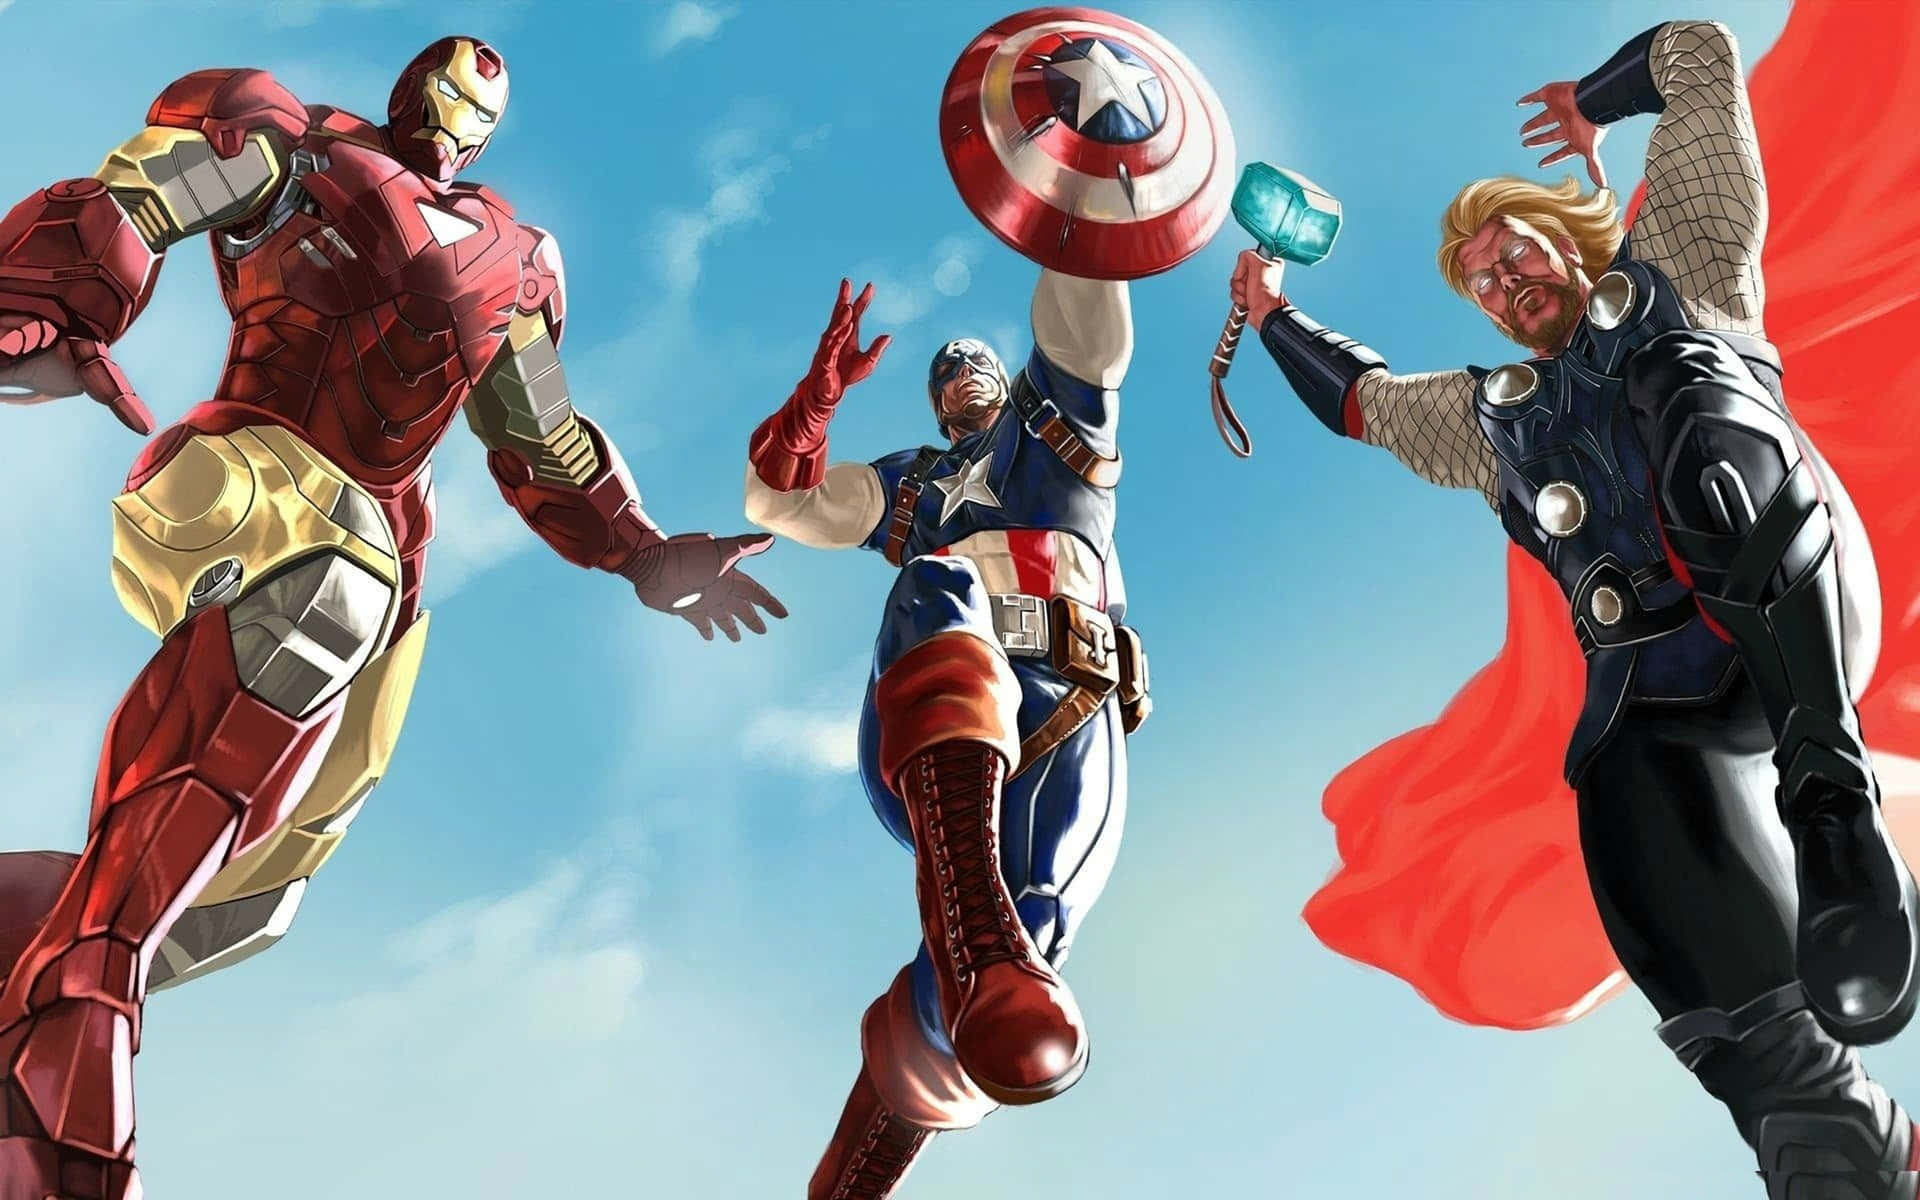 Iron Man and Thor locked in intense combat Wallpaper